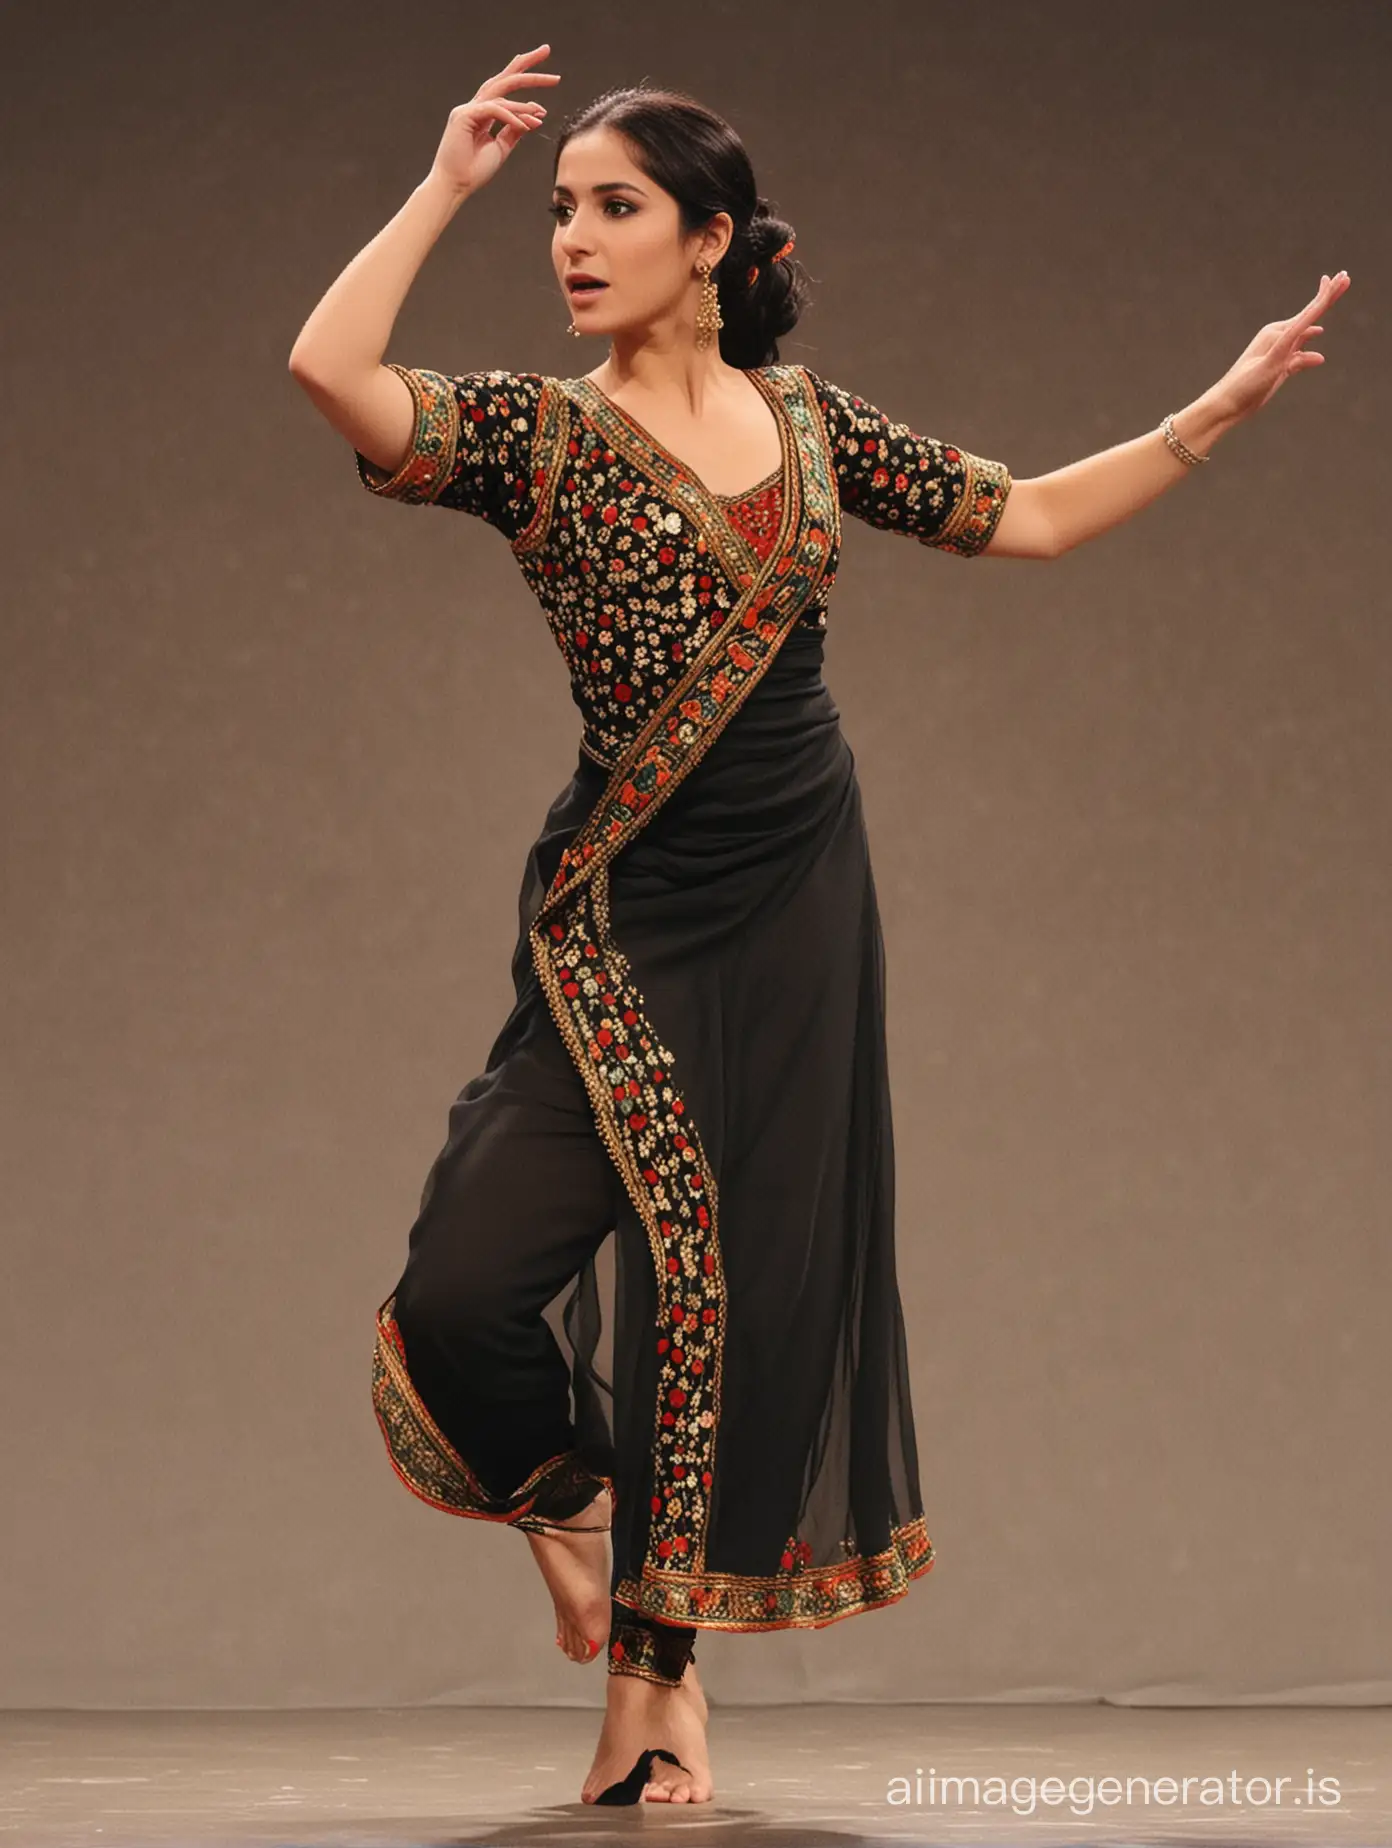 Ghassemabadi-Dance-Performance-Traditional-Iranian-Dance-in-Motion